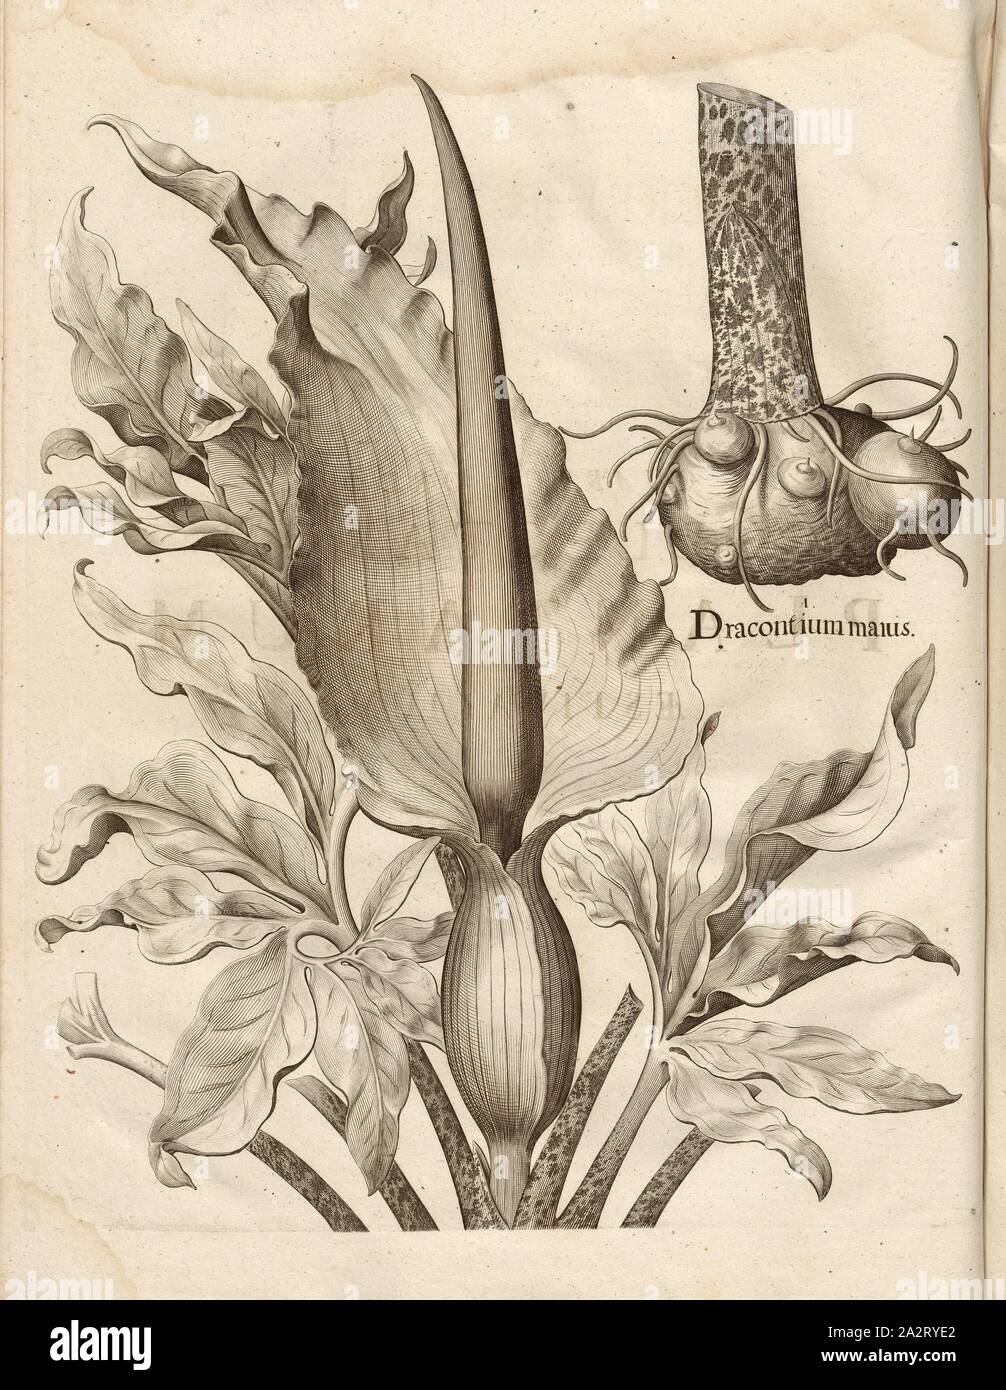 dracontium more, Copper Engraving, Dragonroot, p. 424, Besler, Basilius; Jungermann, Ludwig, 1713, Basilius Besler: Hortus Eystettensis (...). Nürnberg, 1713 Stock Photo